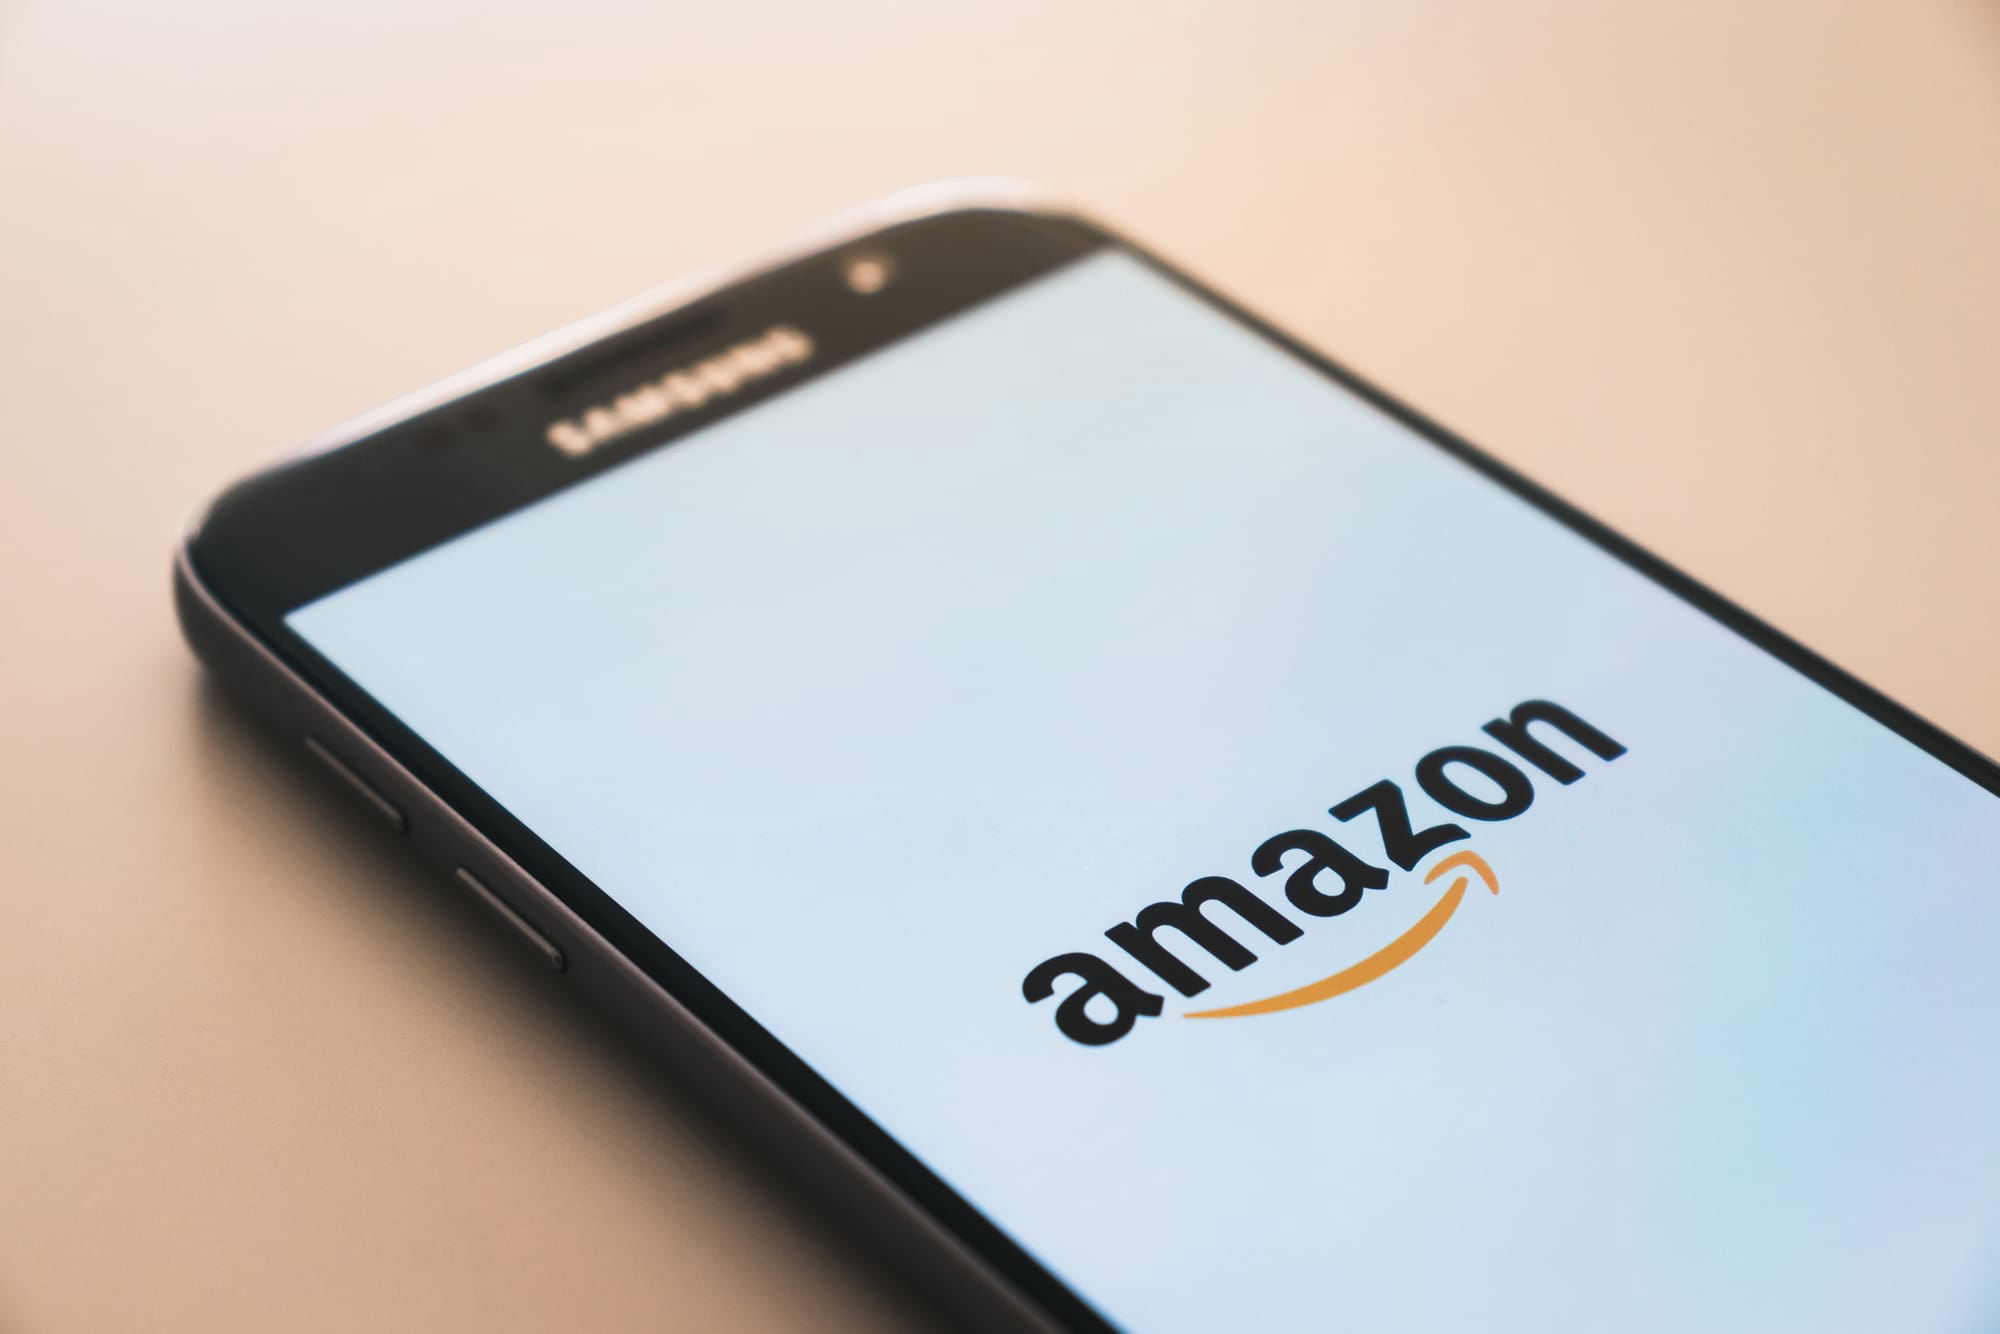 After hiring 100,000 people, Amazon hiring 75,000 more.